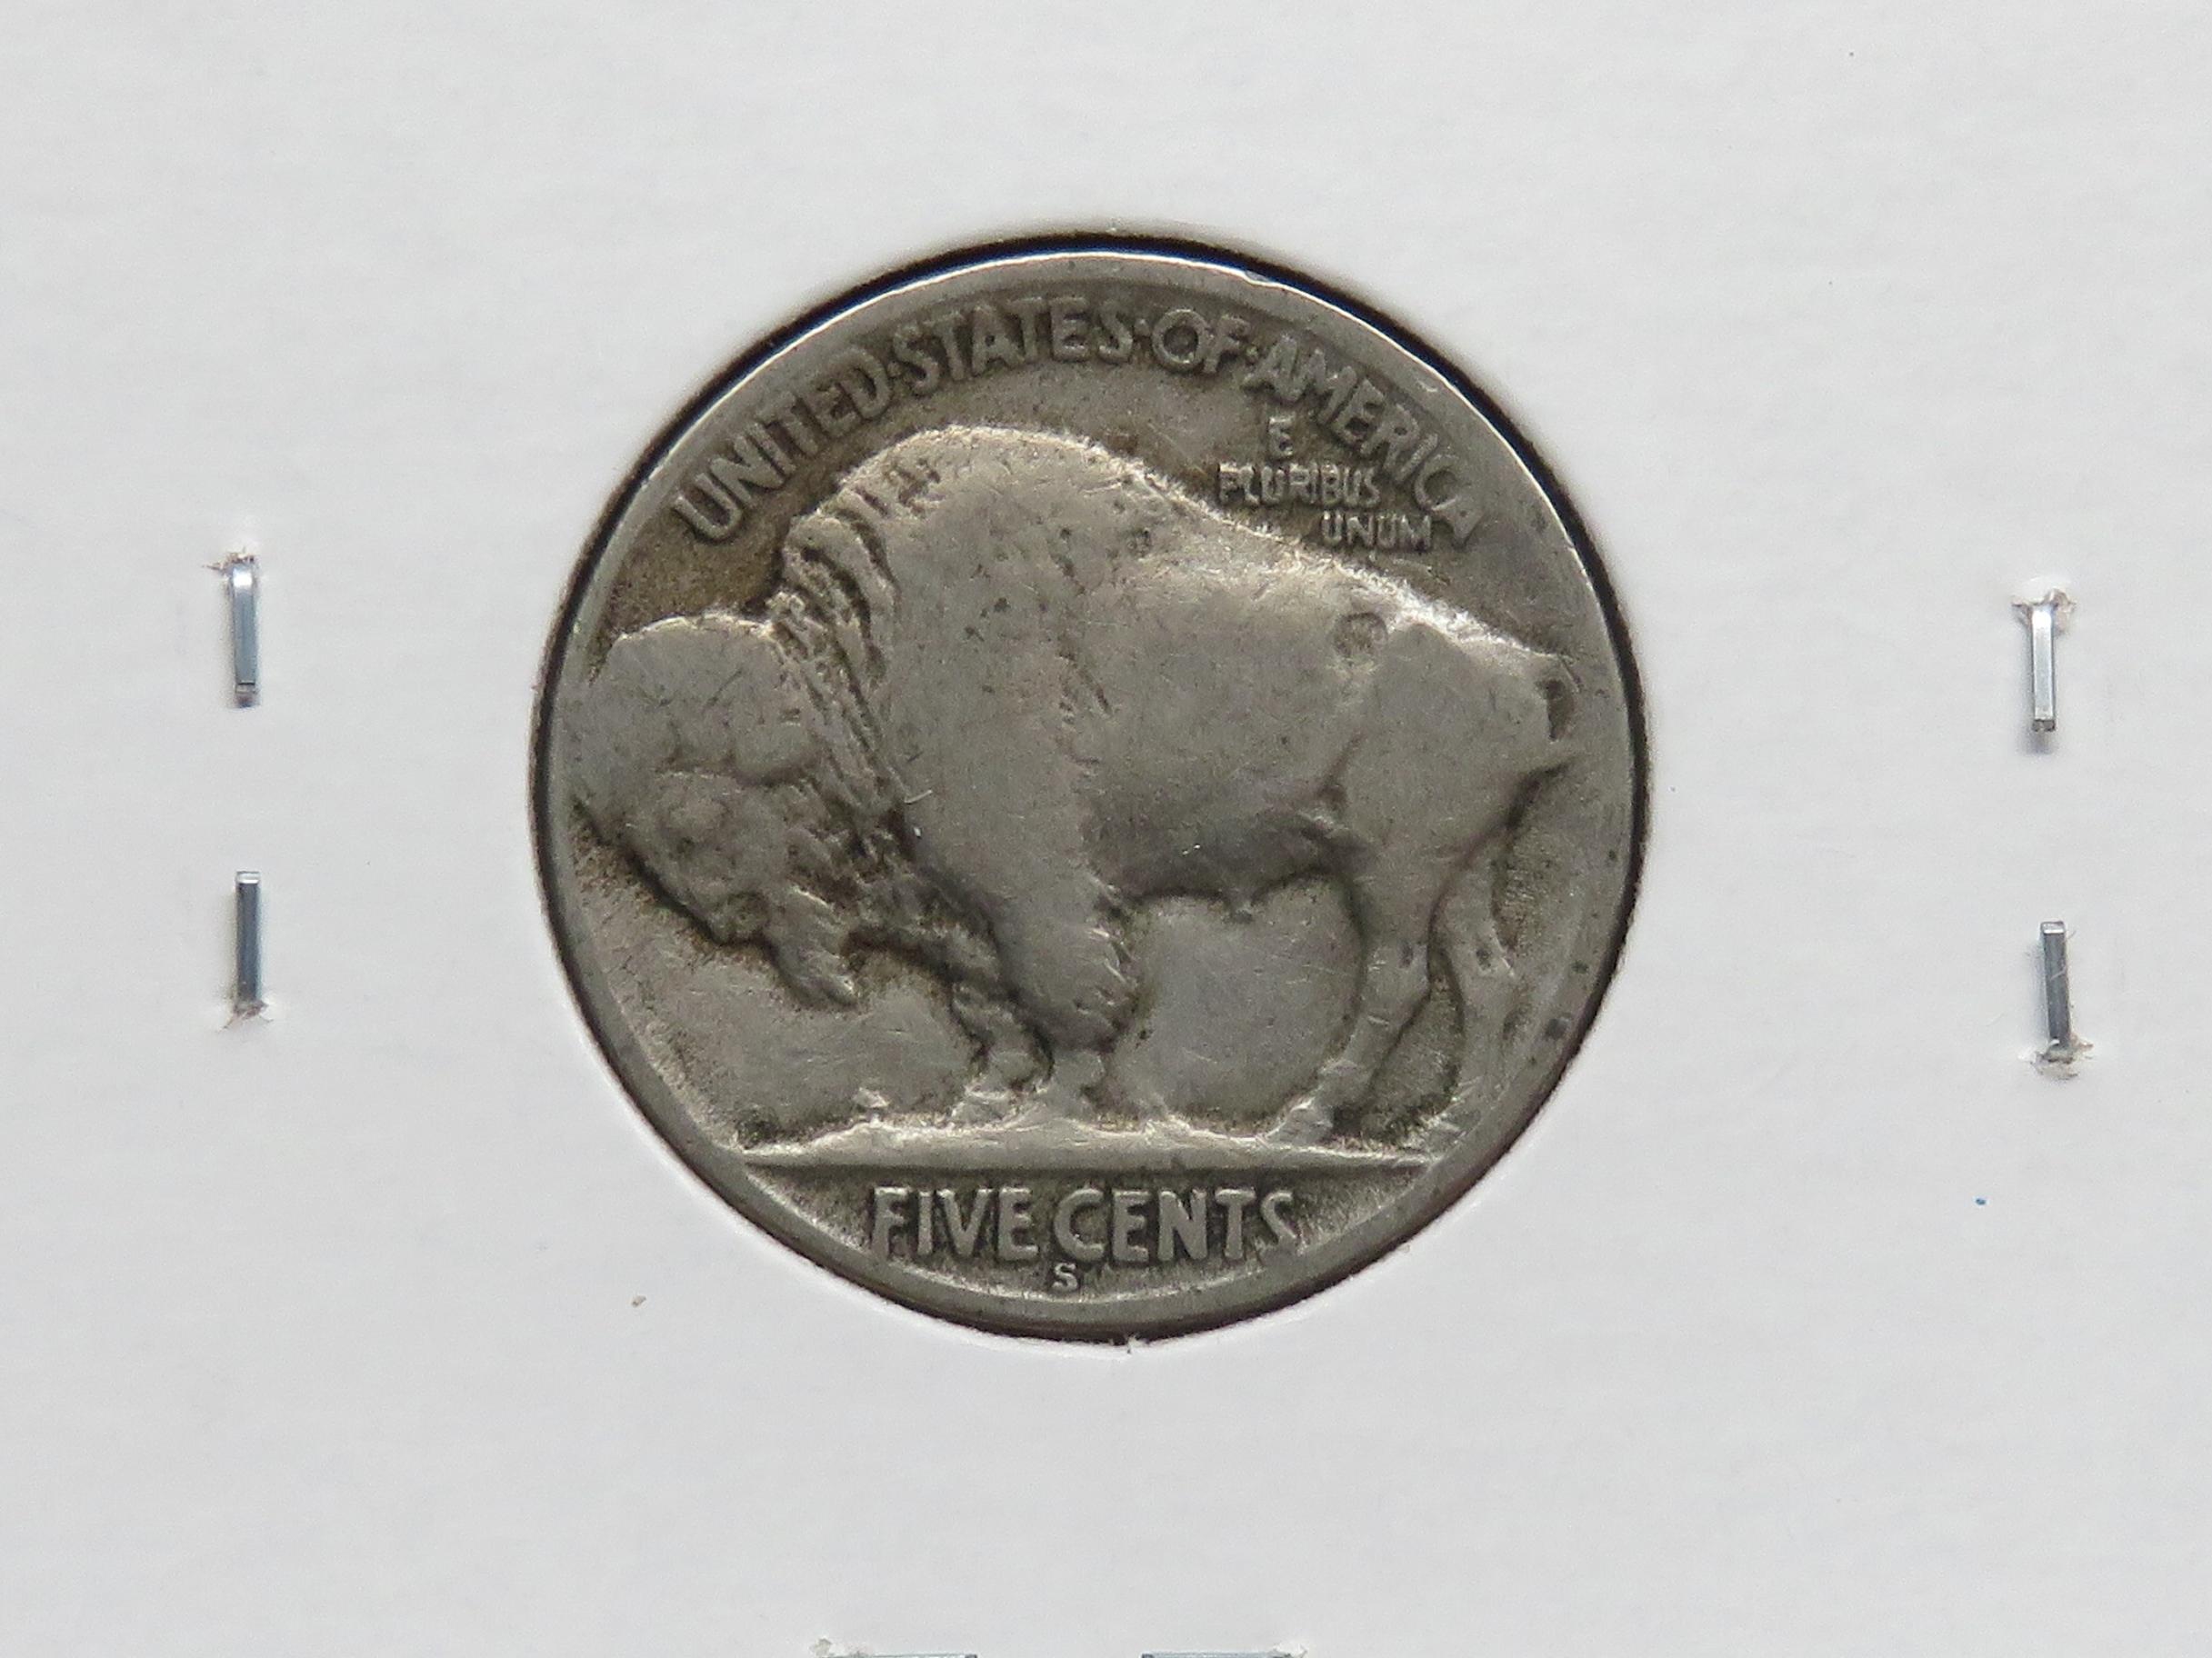 3 Buffalo Nickels: 1920S VG, 1921 VG, 1921S G better date